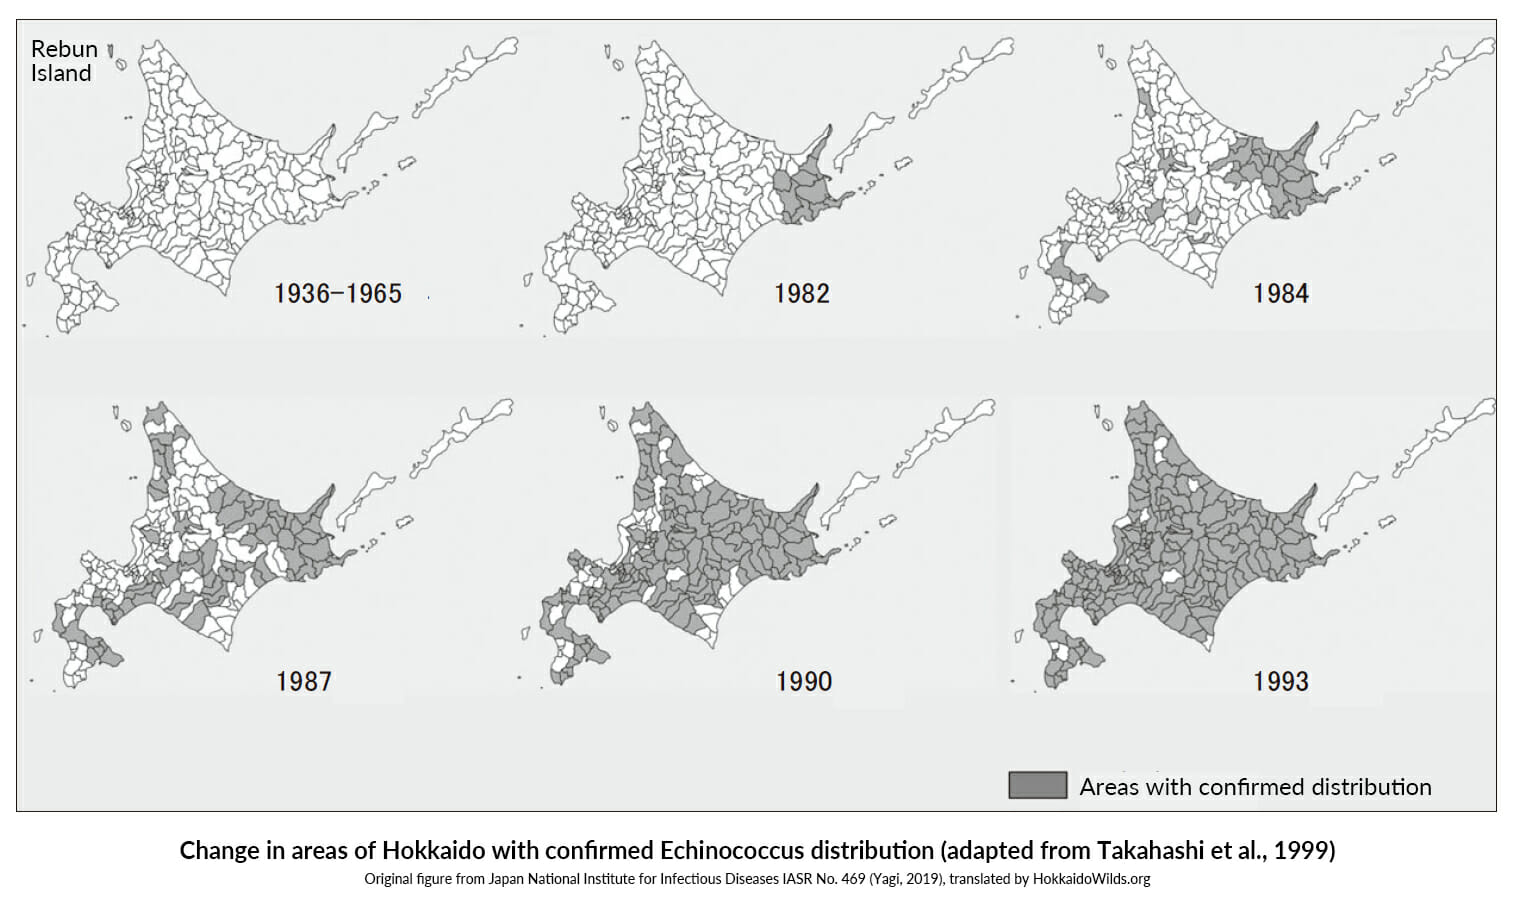 Change in distribution of Echinococcus in Hokkaido